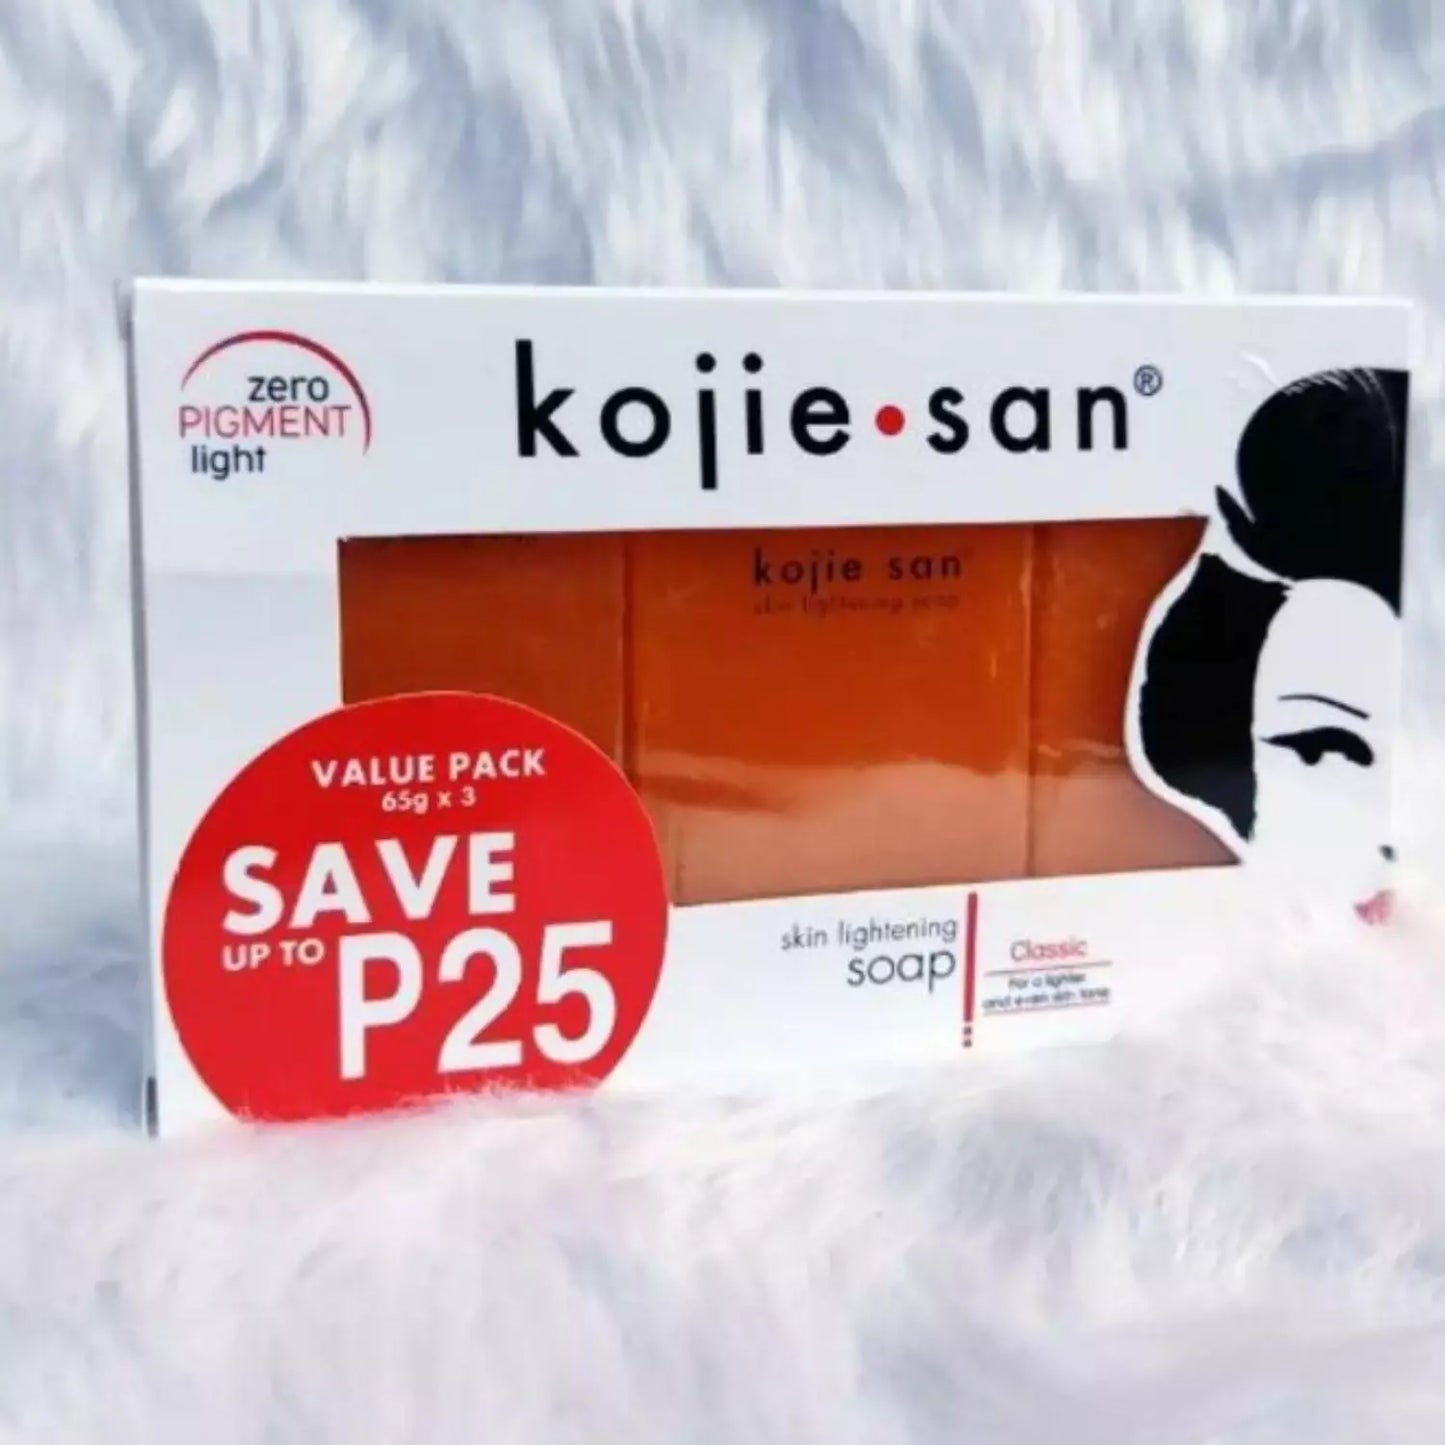 Kojie san Classic Lightening Kojic Soap (65g.x3) EXPIRES 02/02/2025